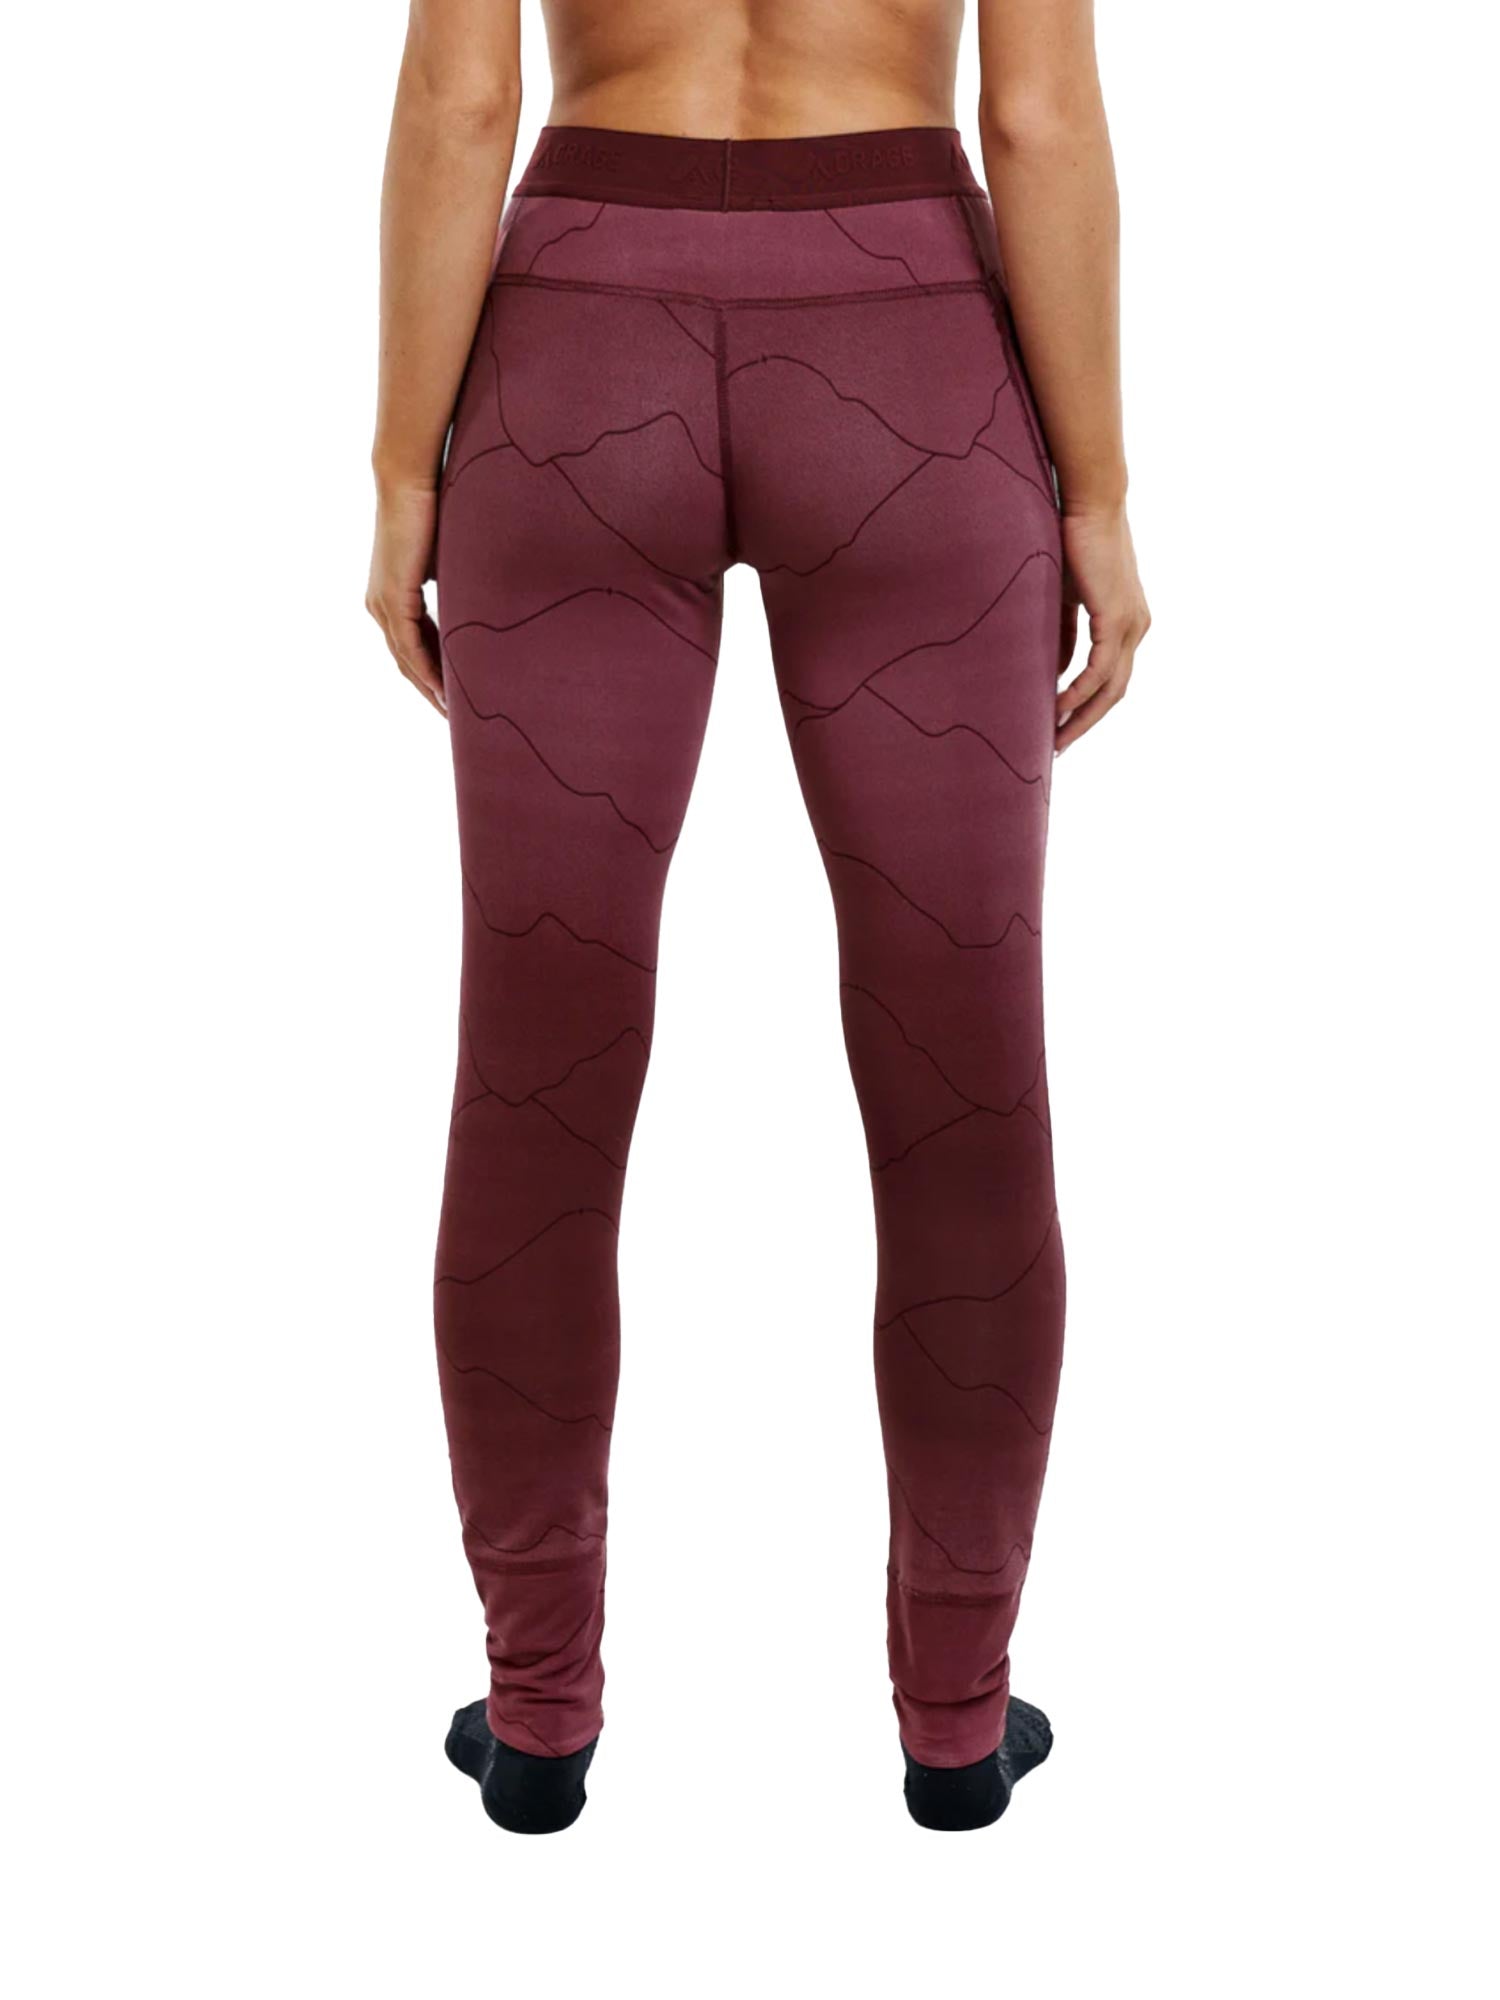 Orage base layer pants, cherry color